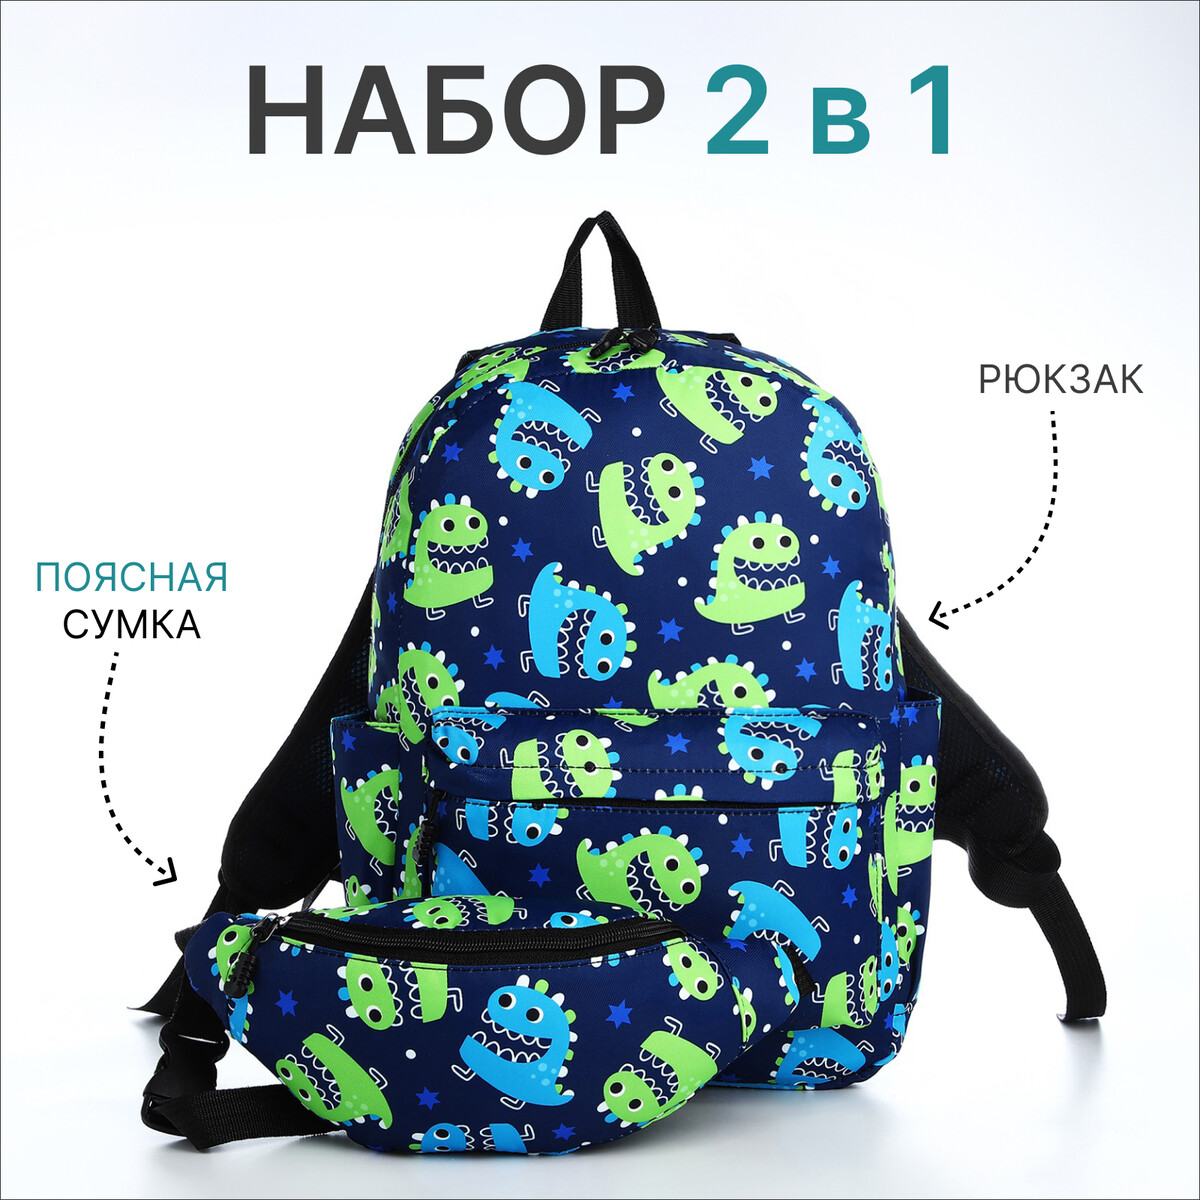 Рюкзак молодежный из текстиля на молнии, 3 кармана, поясная сумка, цвет синий